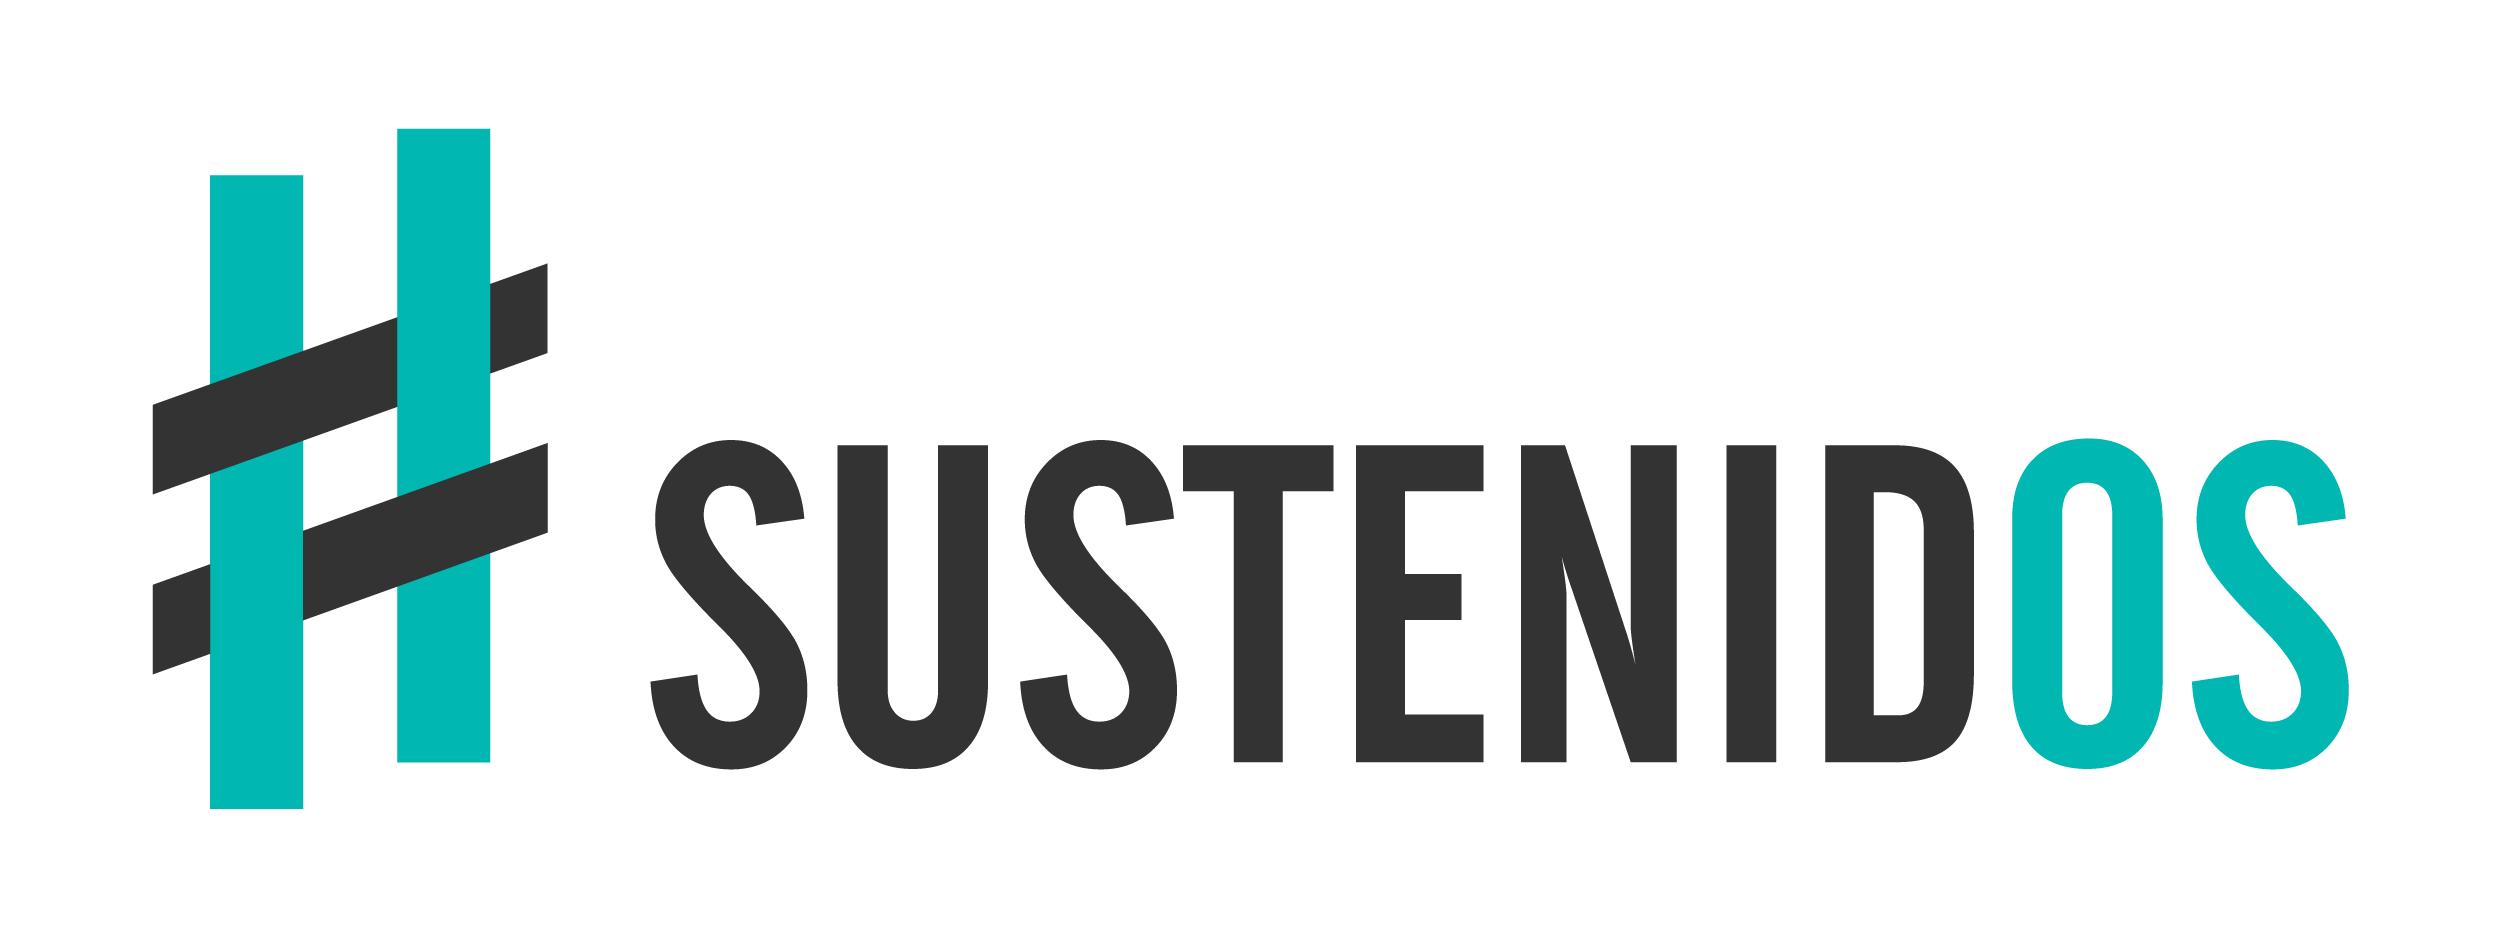 Logo: Sustenidos